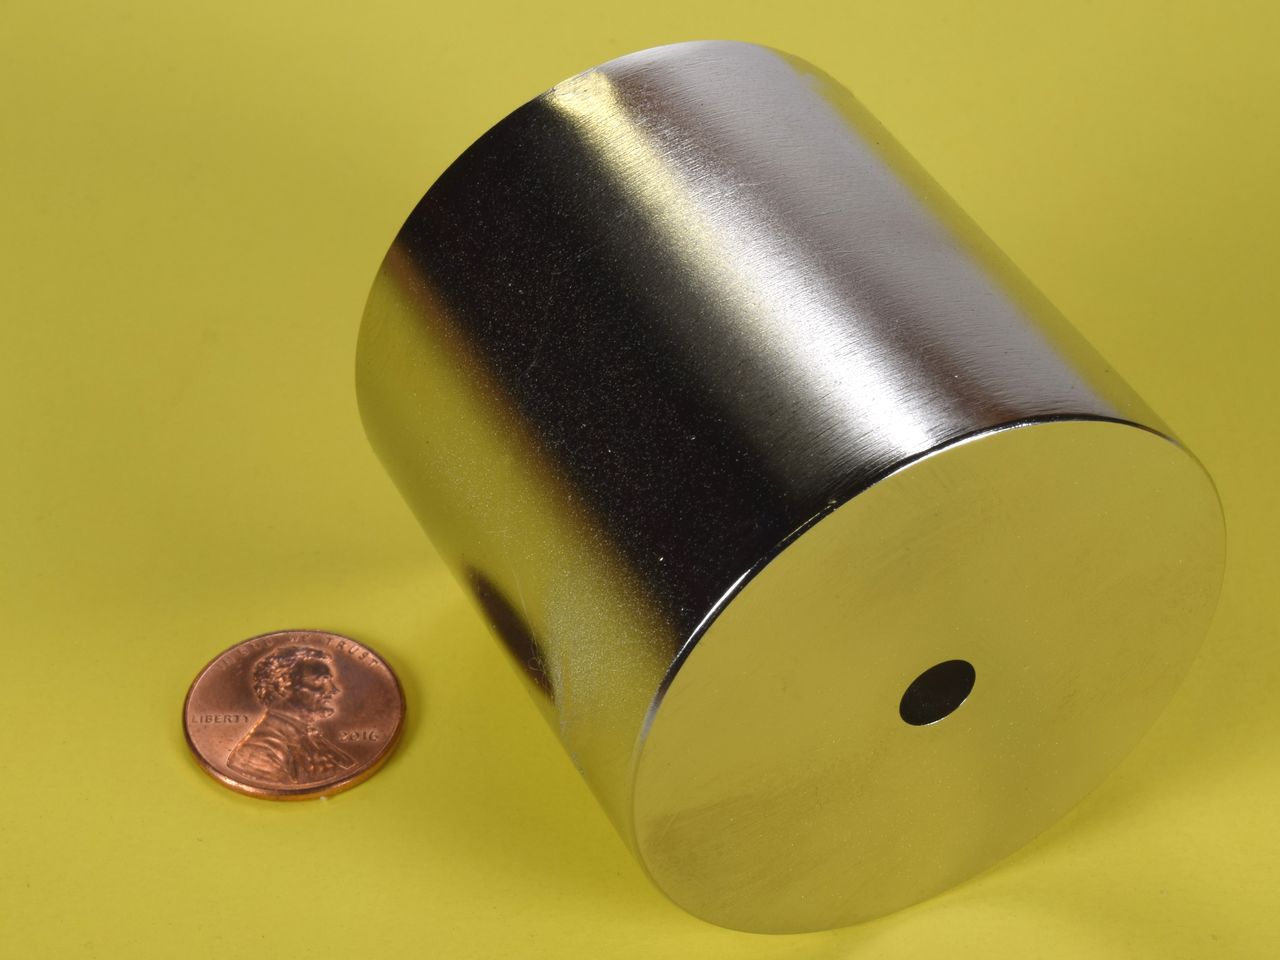 1/4 x 1/2 inch Cylinder/Disc Magnets. 5 Diametrically Magnetized Neodymium